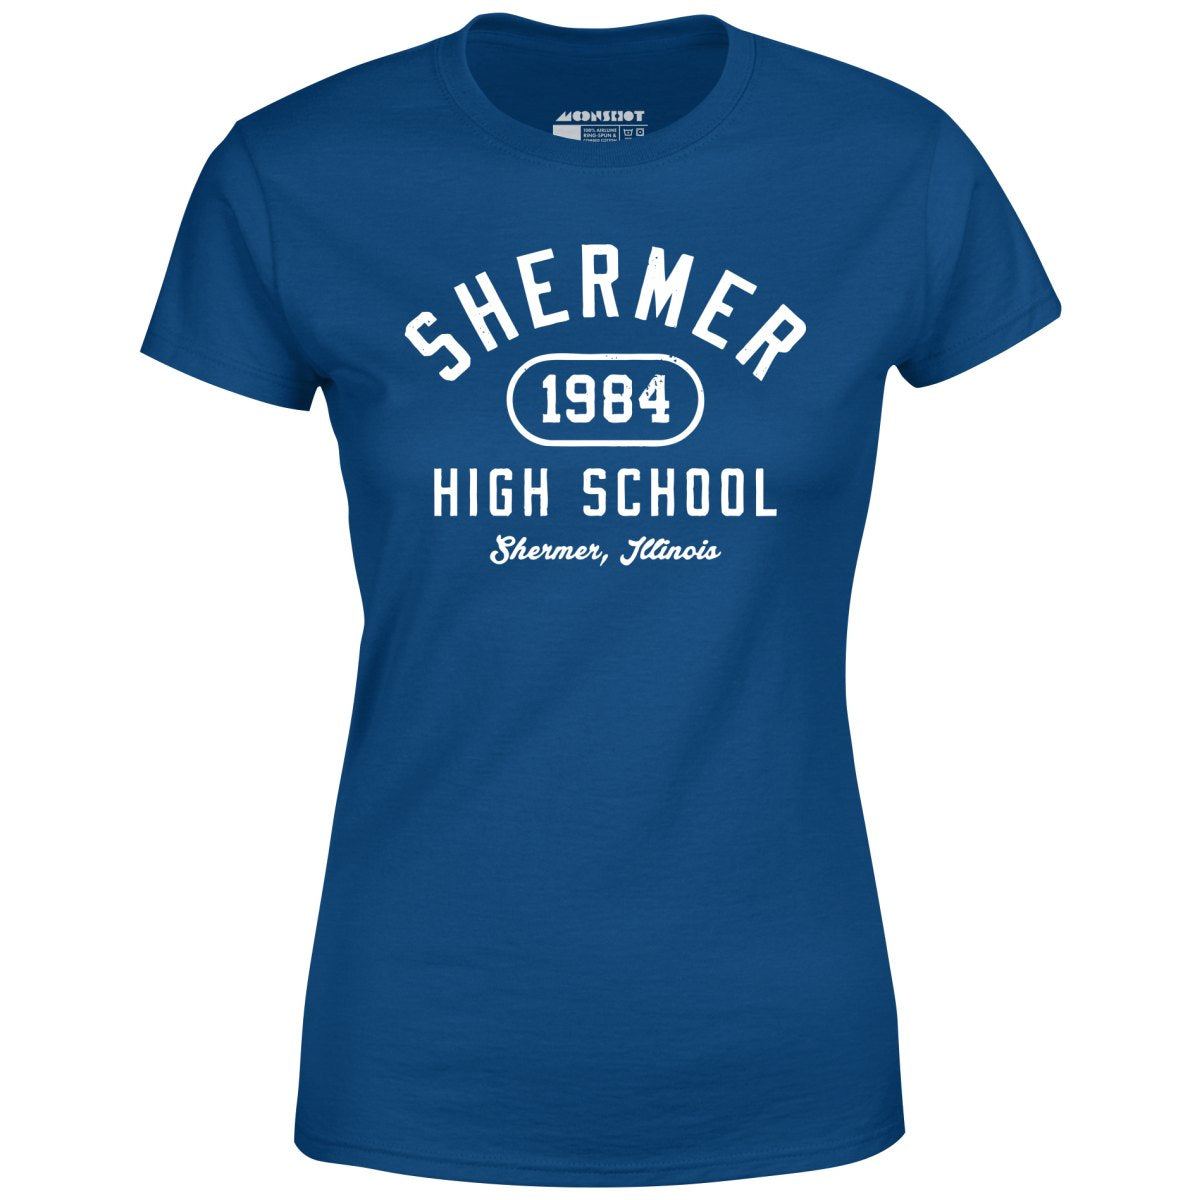 Shermer High School 1984 - Women's T-Shirt